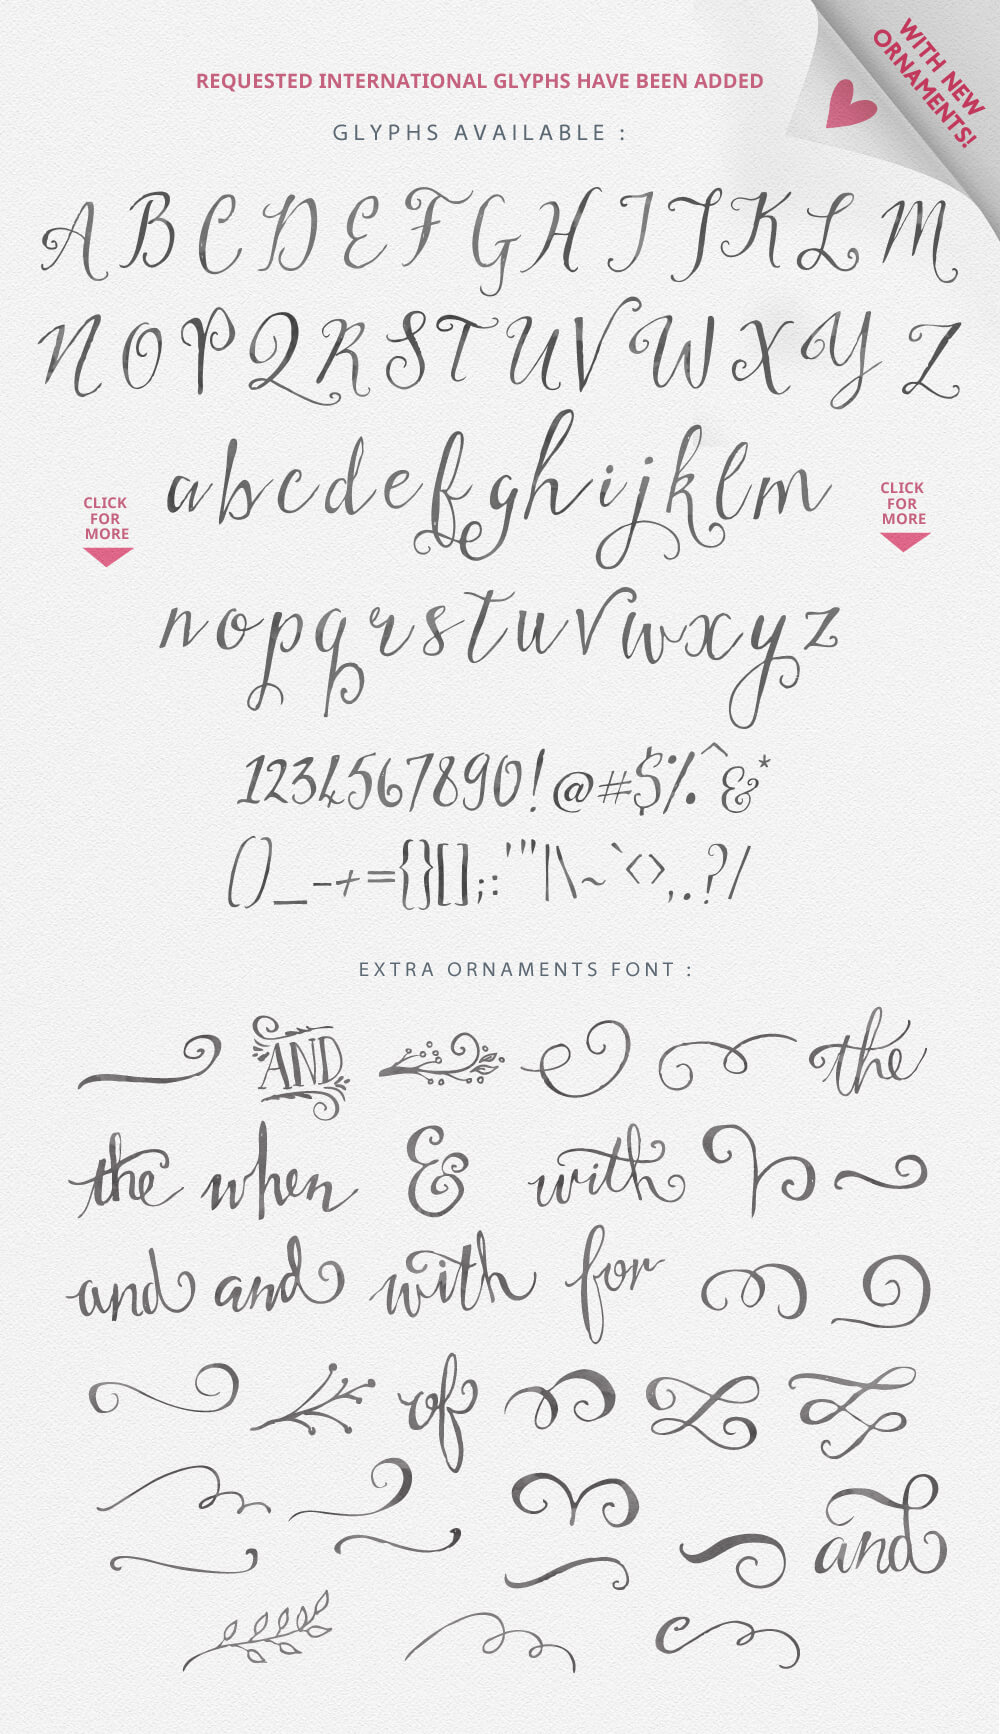 Stringfellow's Calligraphy Font